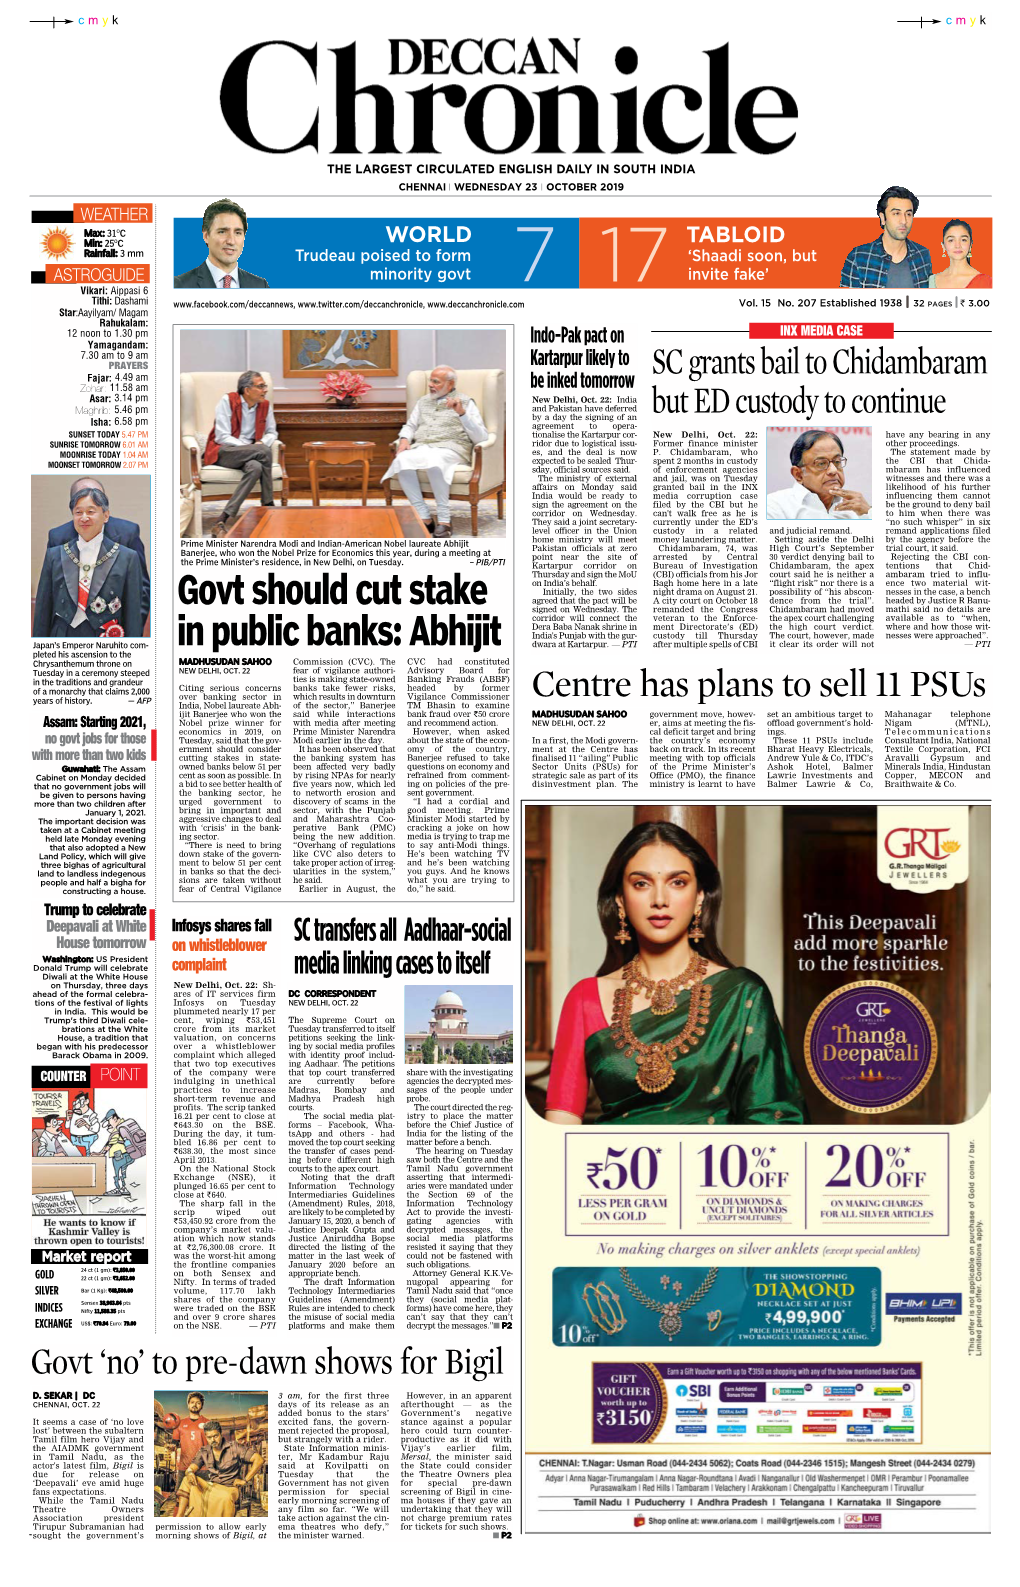 Govt Should Cut Stake in Public Banks: Abhijit